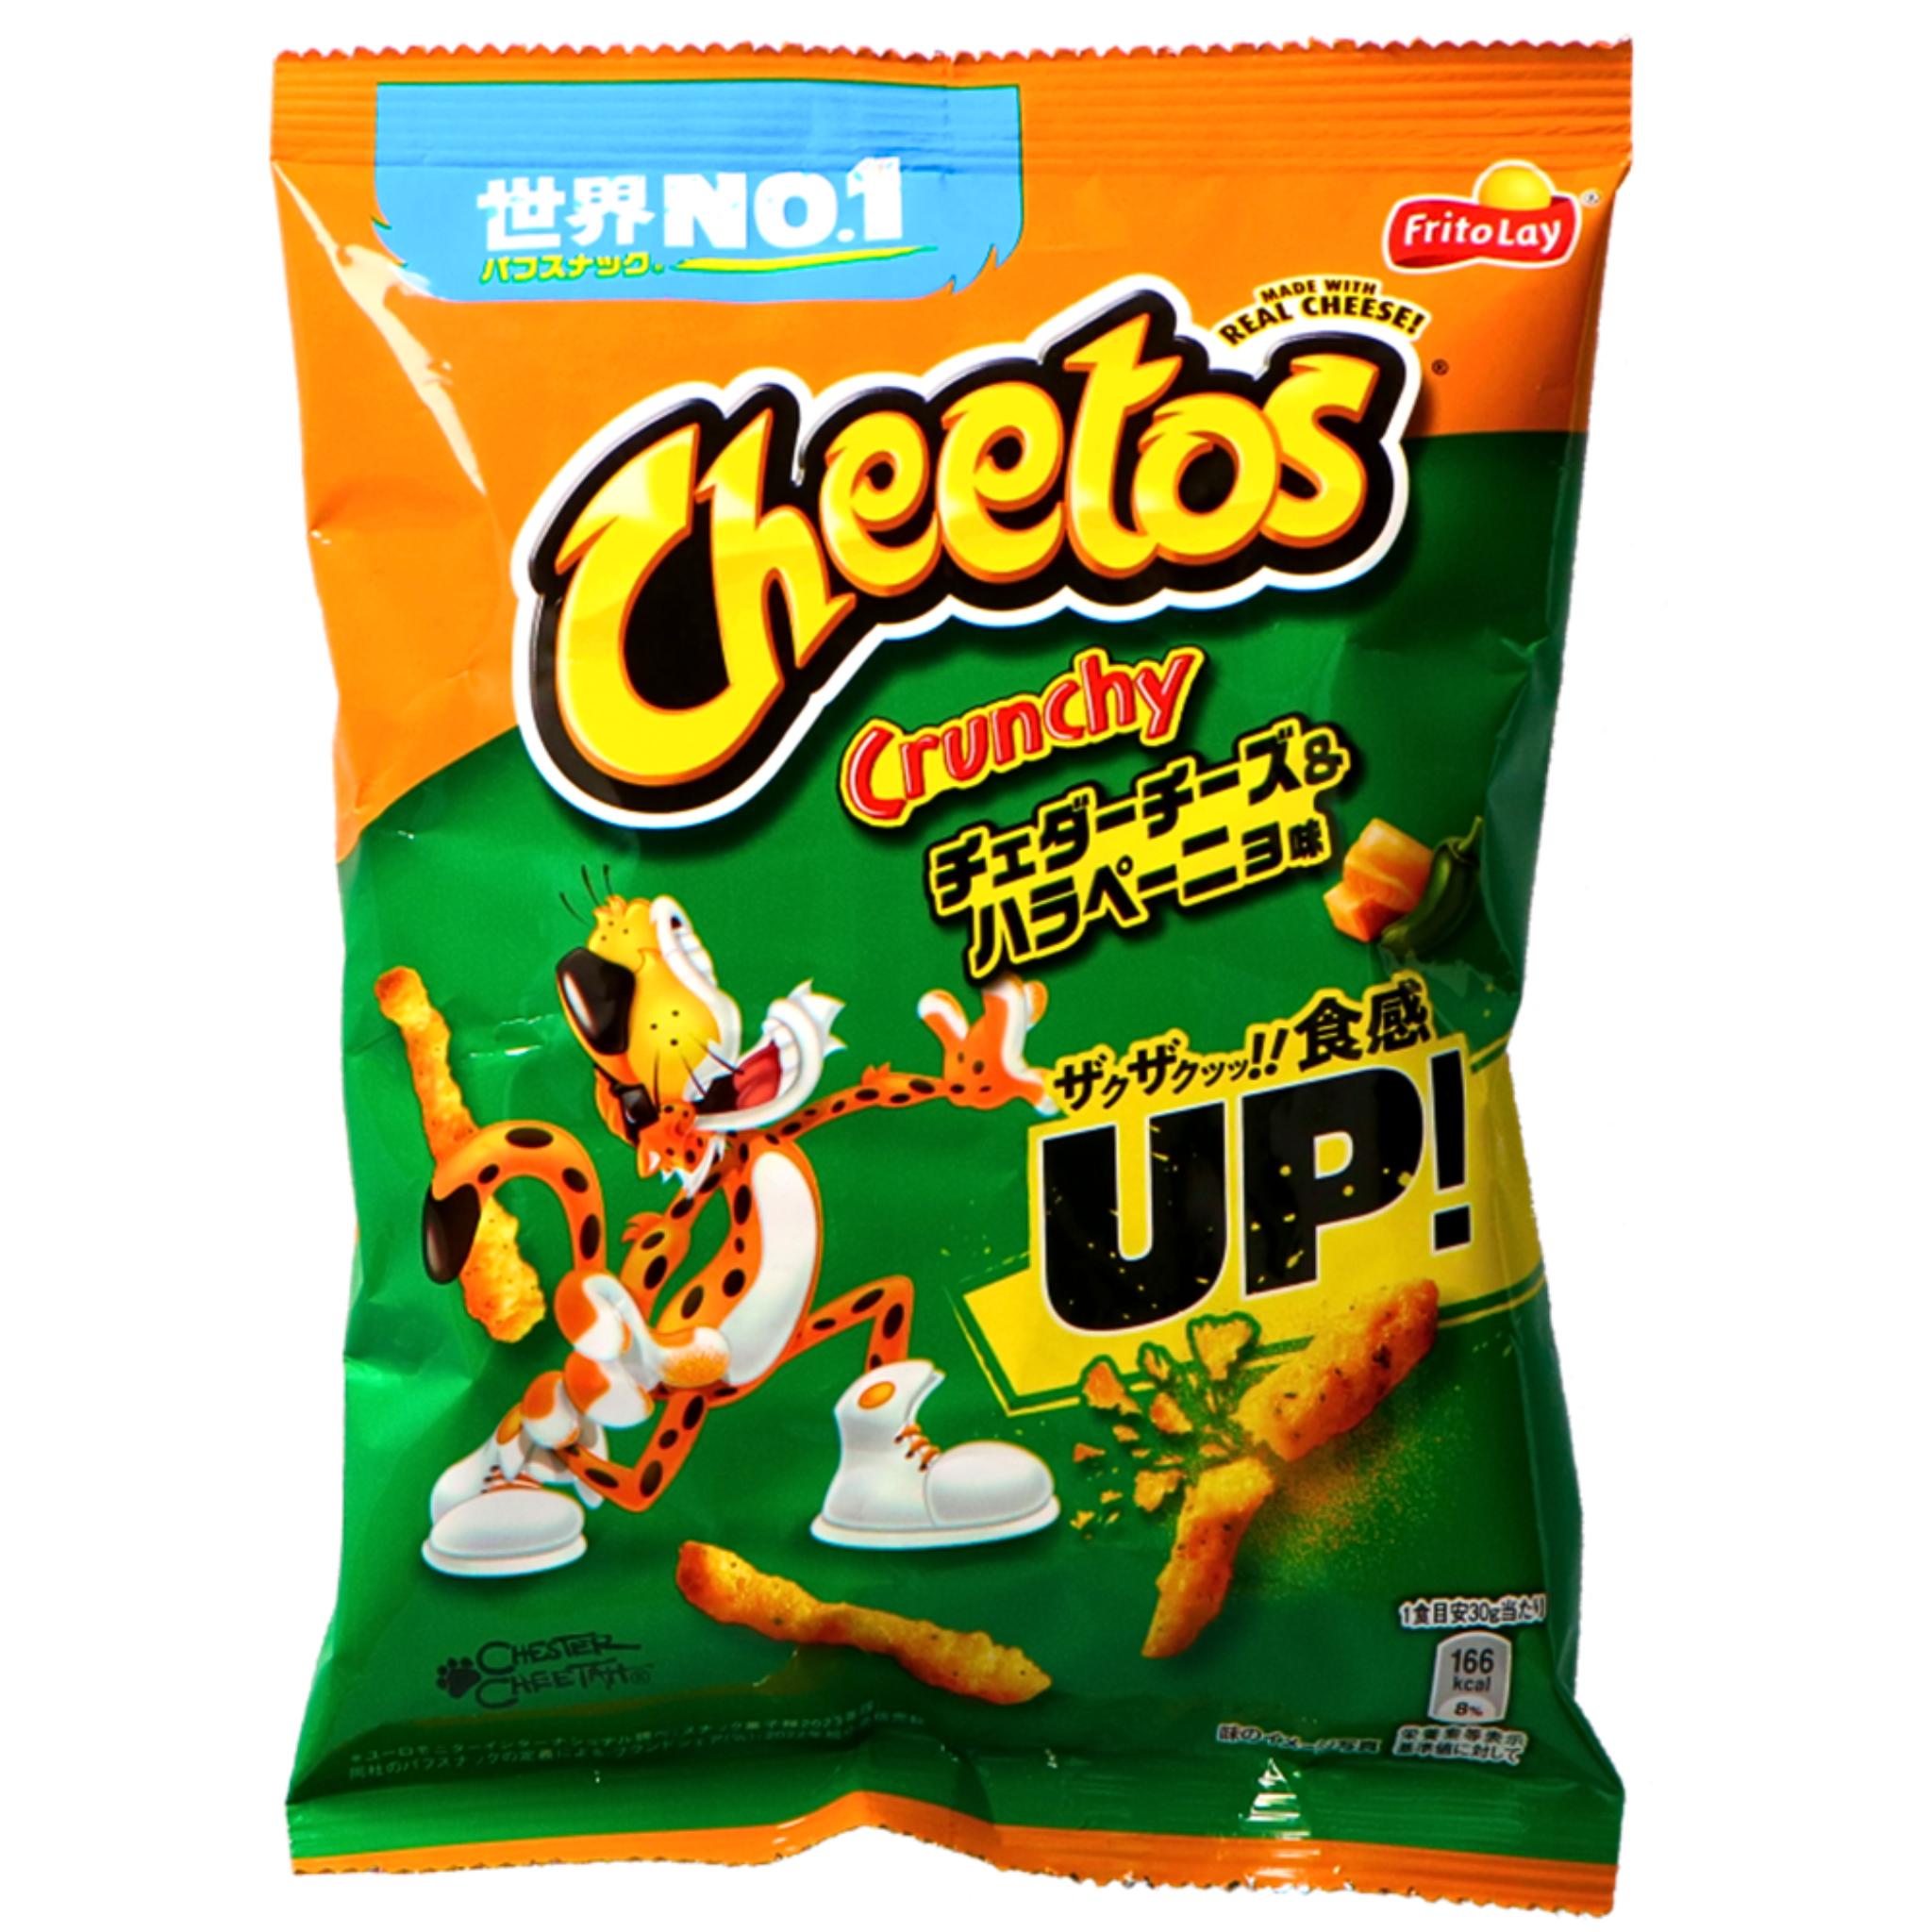 Cheetos Crunchy Cheddar Cheese &amp; Jalapeno - 75g (JAPANESE)